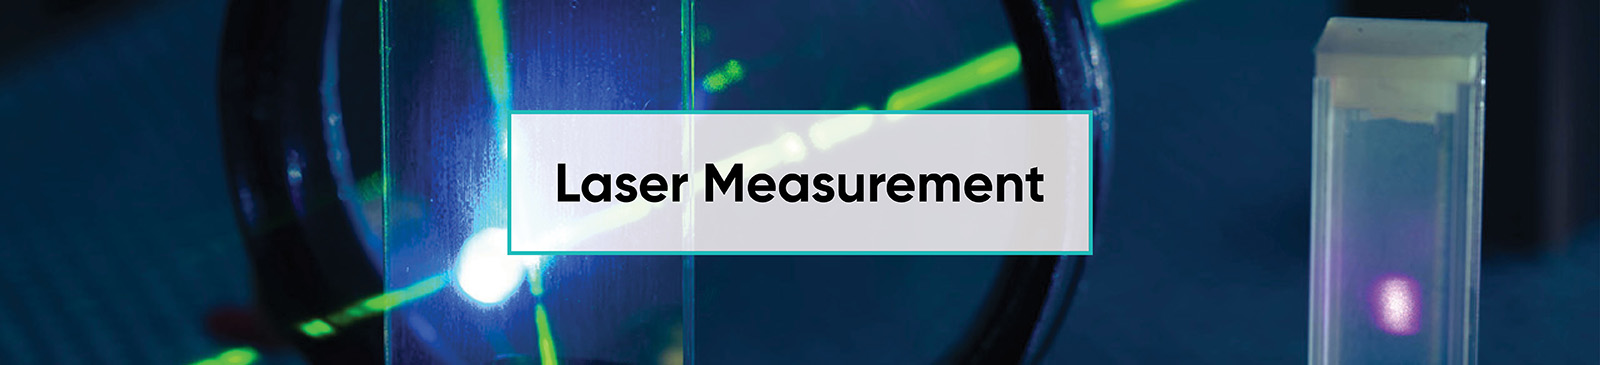 Laser Measurement